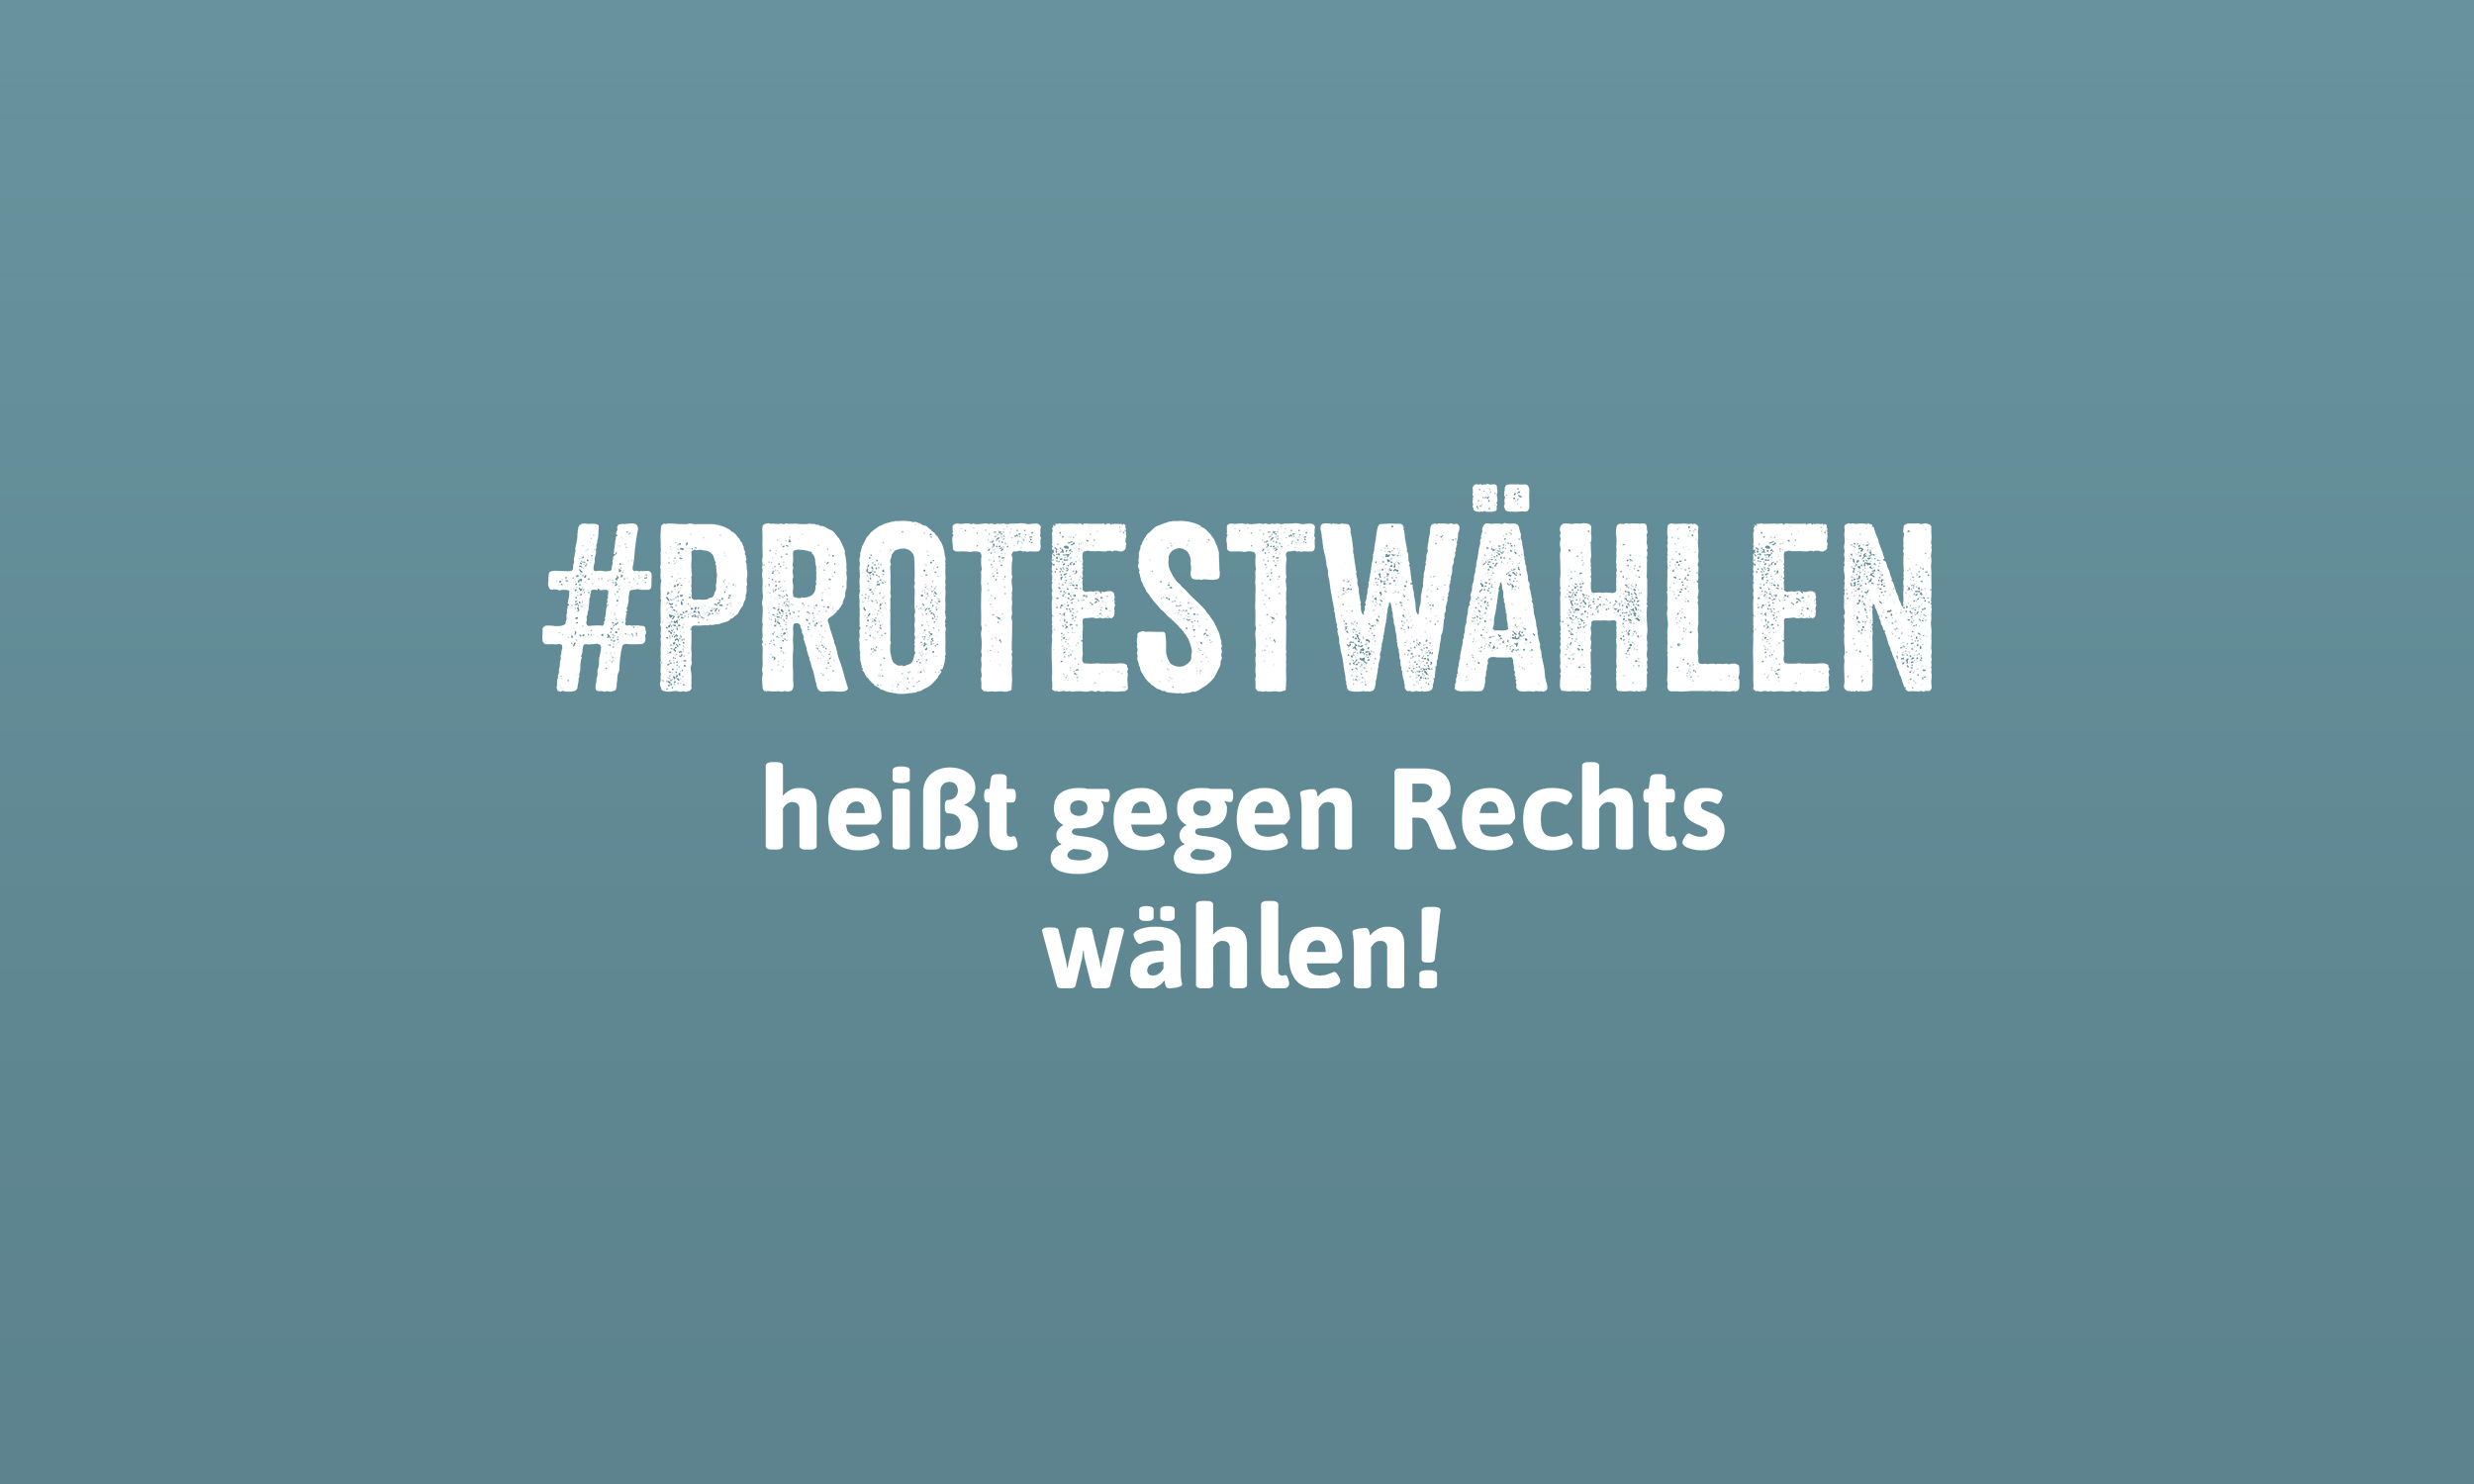 (c) Protestwaehlen.de